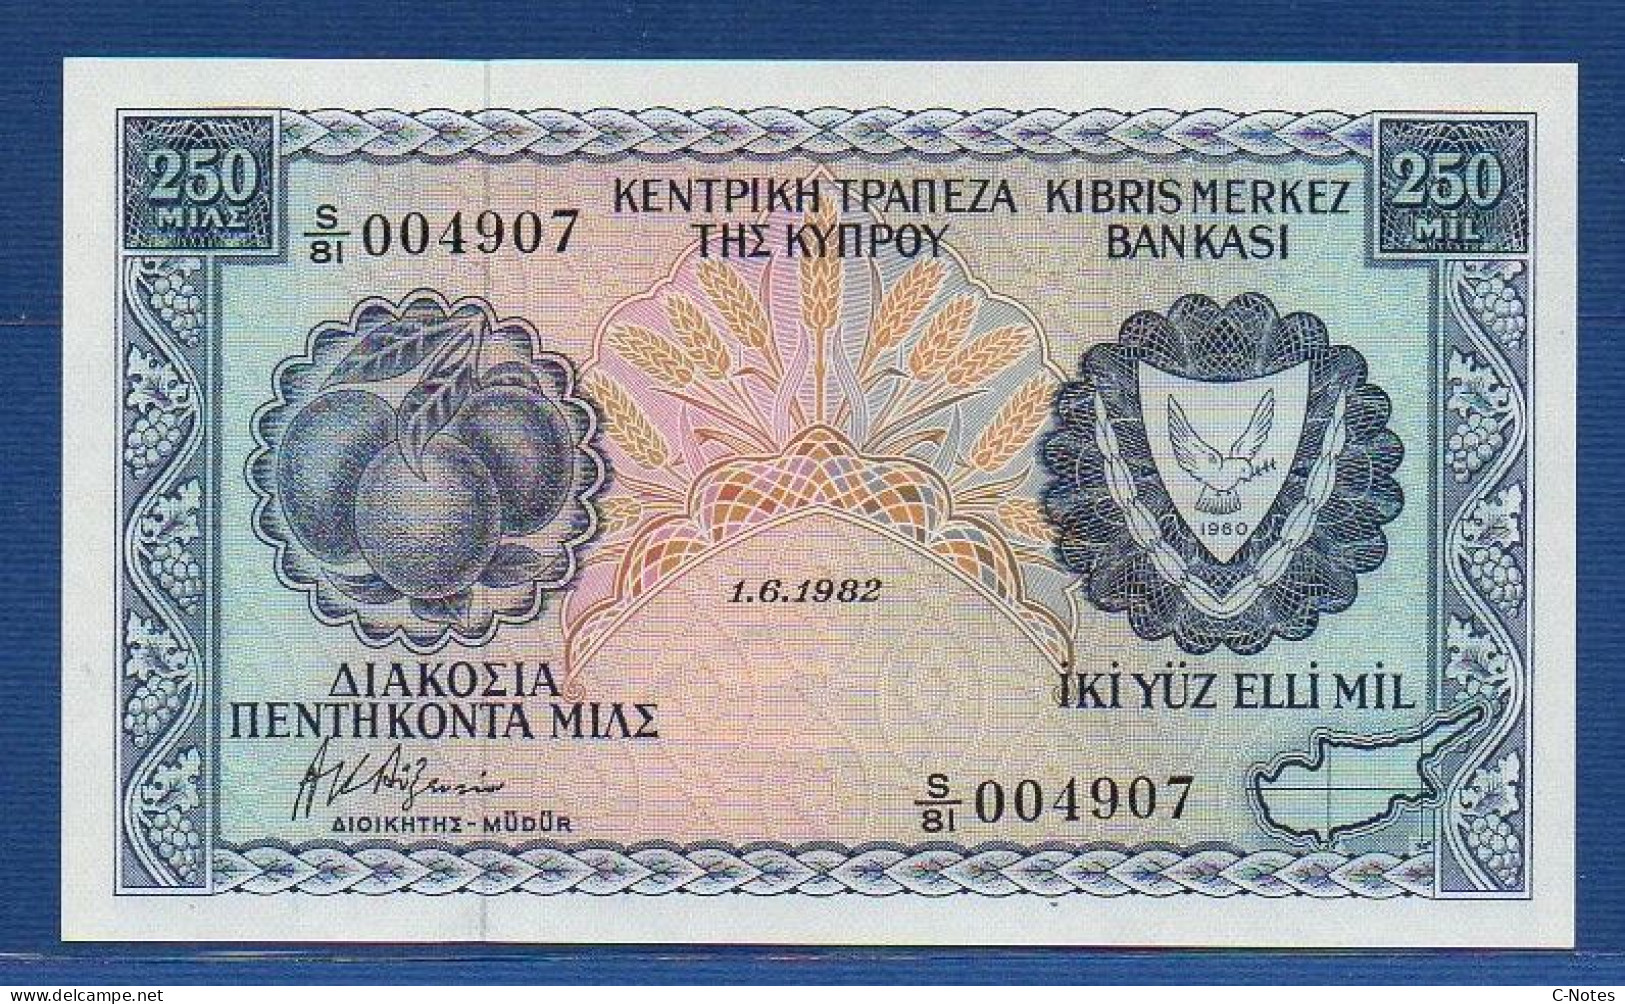 CYPRUS - P.41c – 250 Mils / Mil 1.6.1982 UNC, S/n S/81 004907 - Chipre